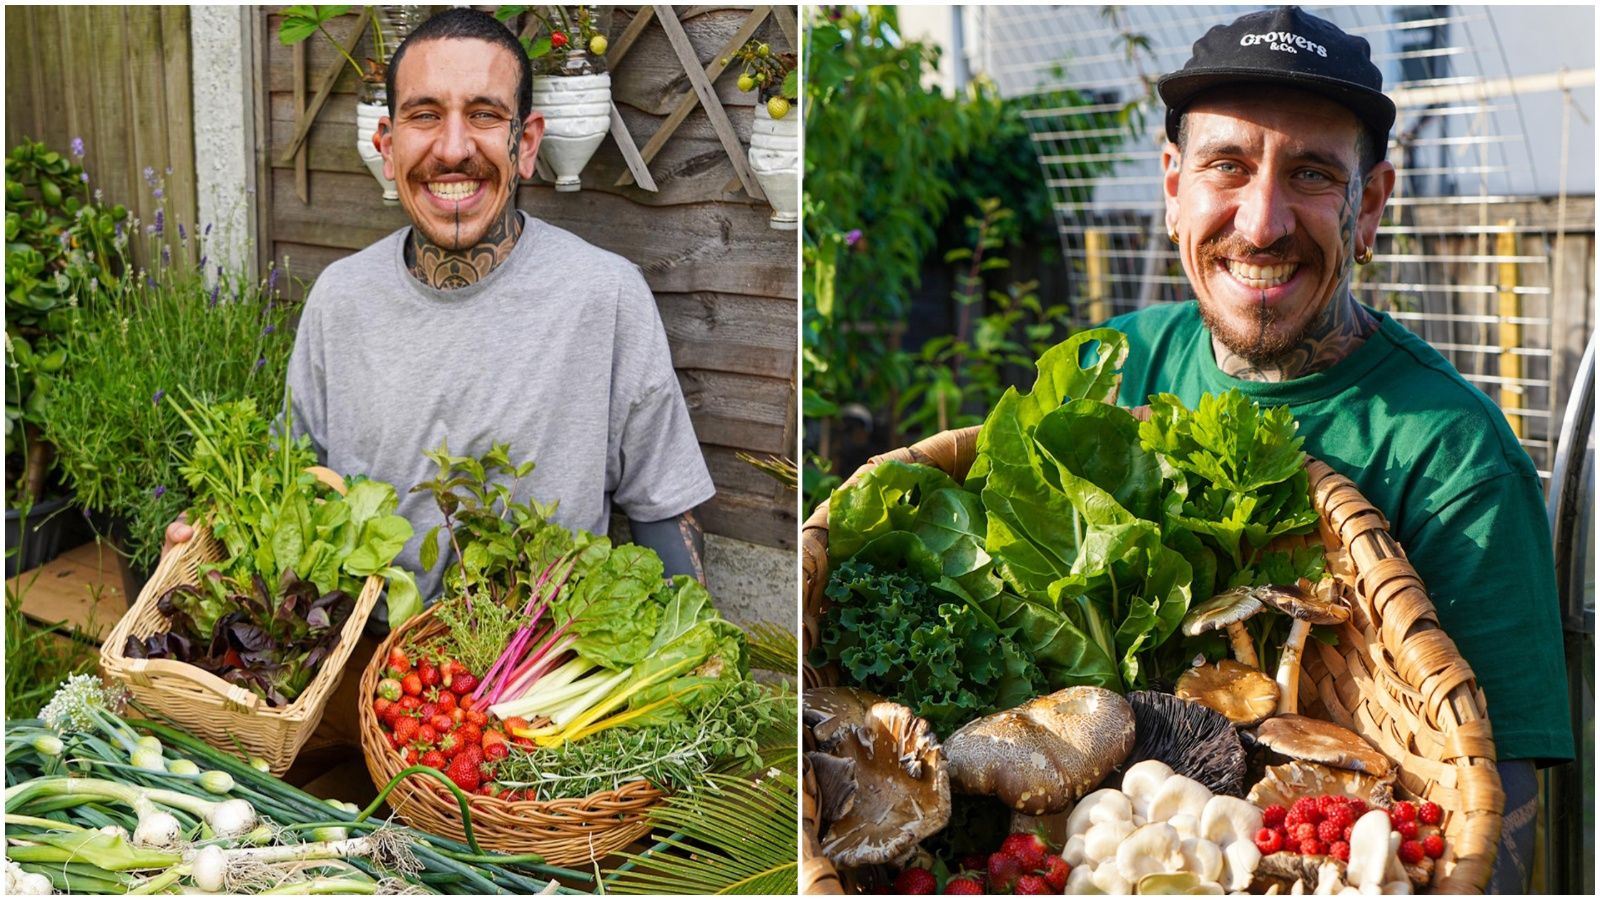 Spicy Moustache: Megapopularan Talijan uči nas trikovima o vrtlarstvu i kuhanju